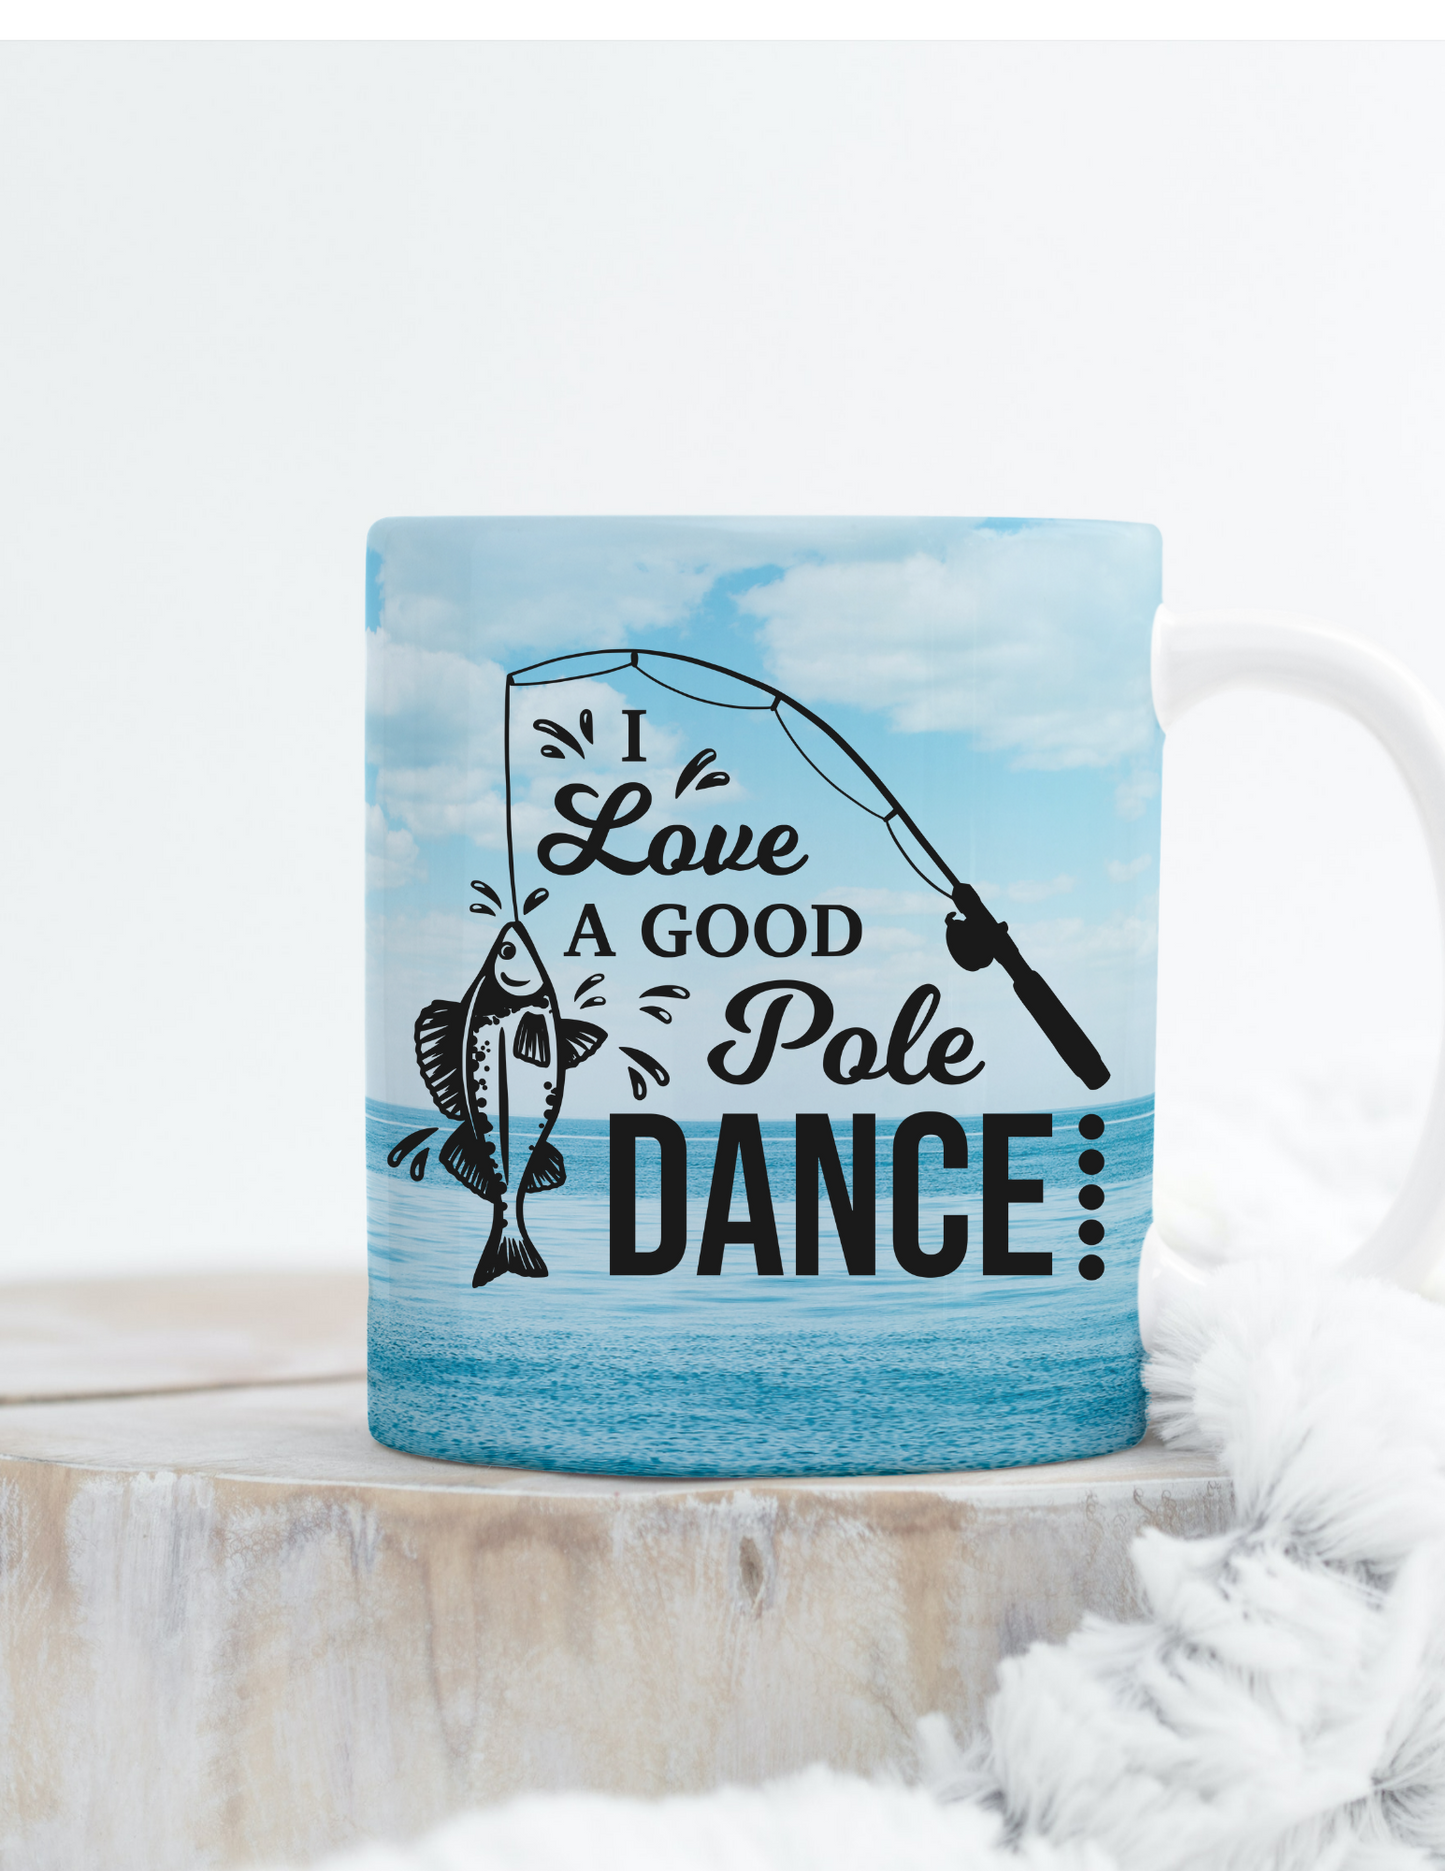 Pole dance mug